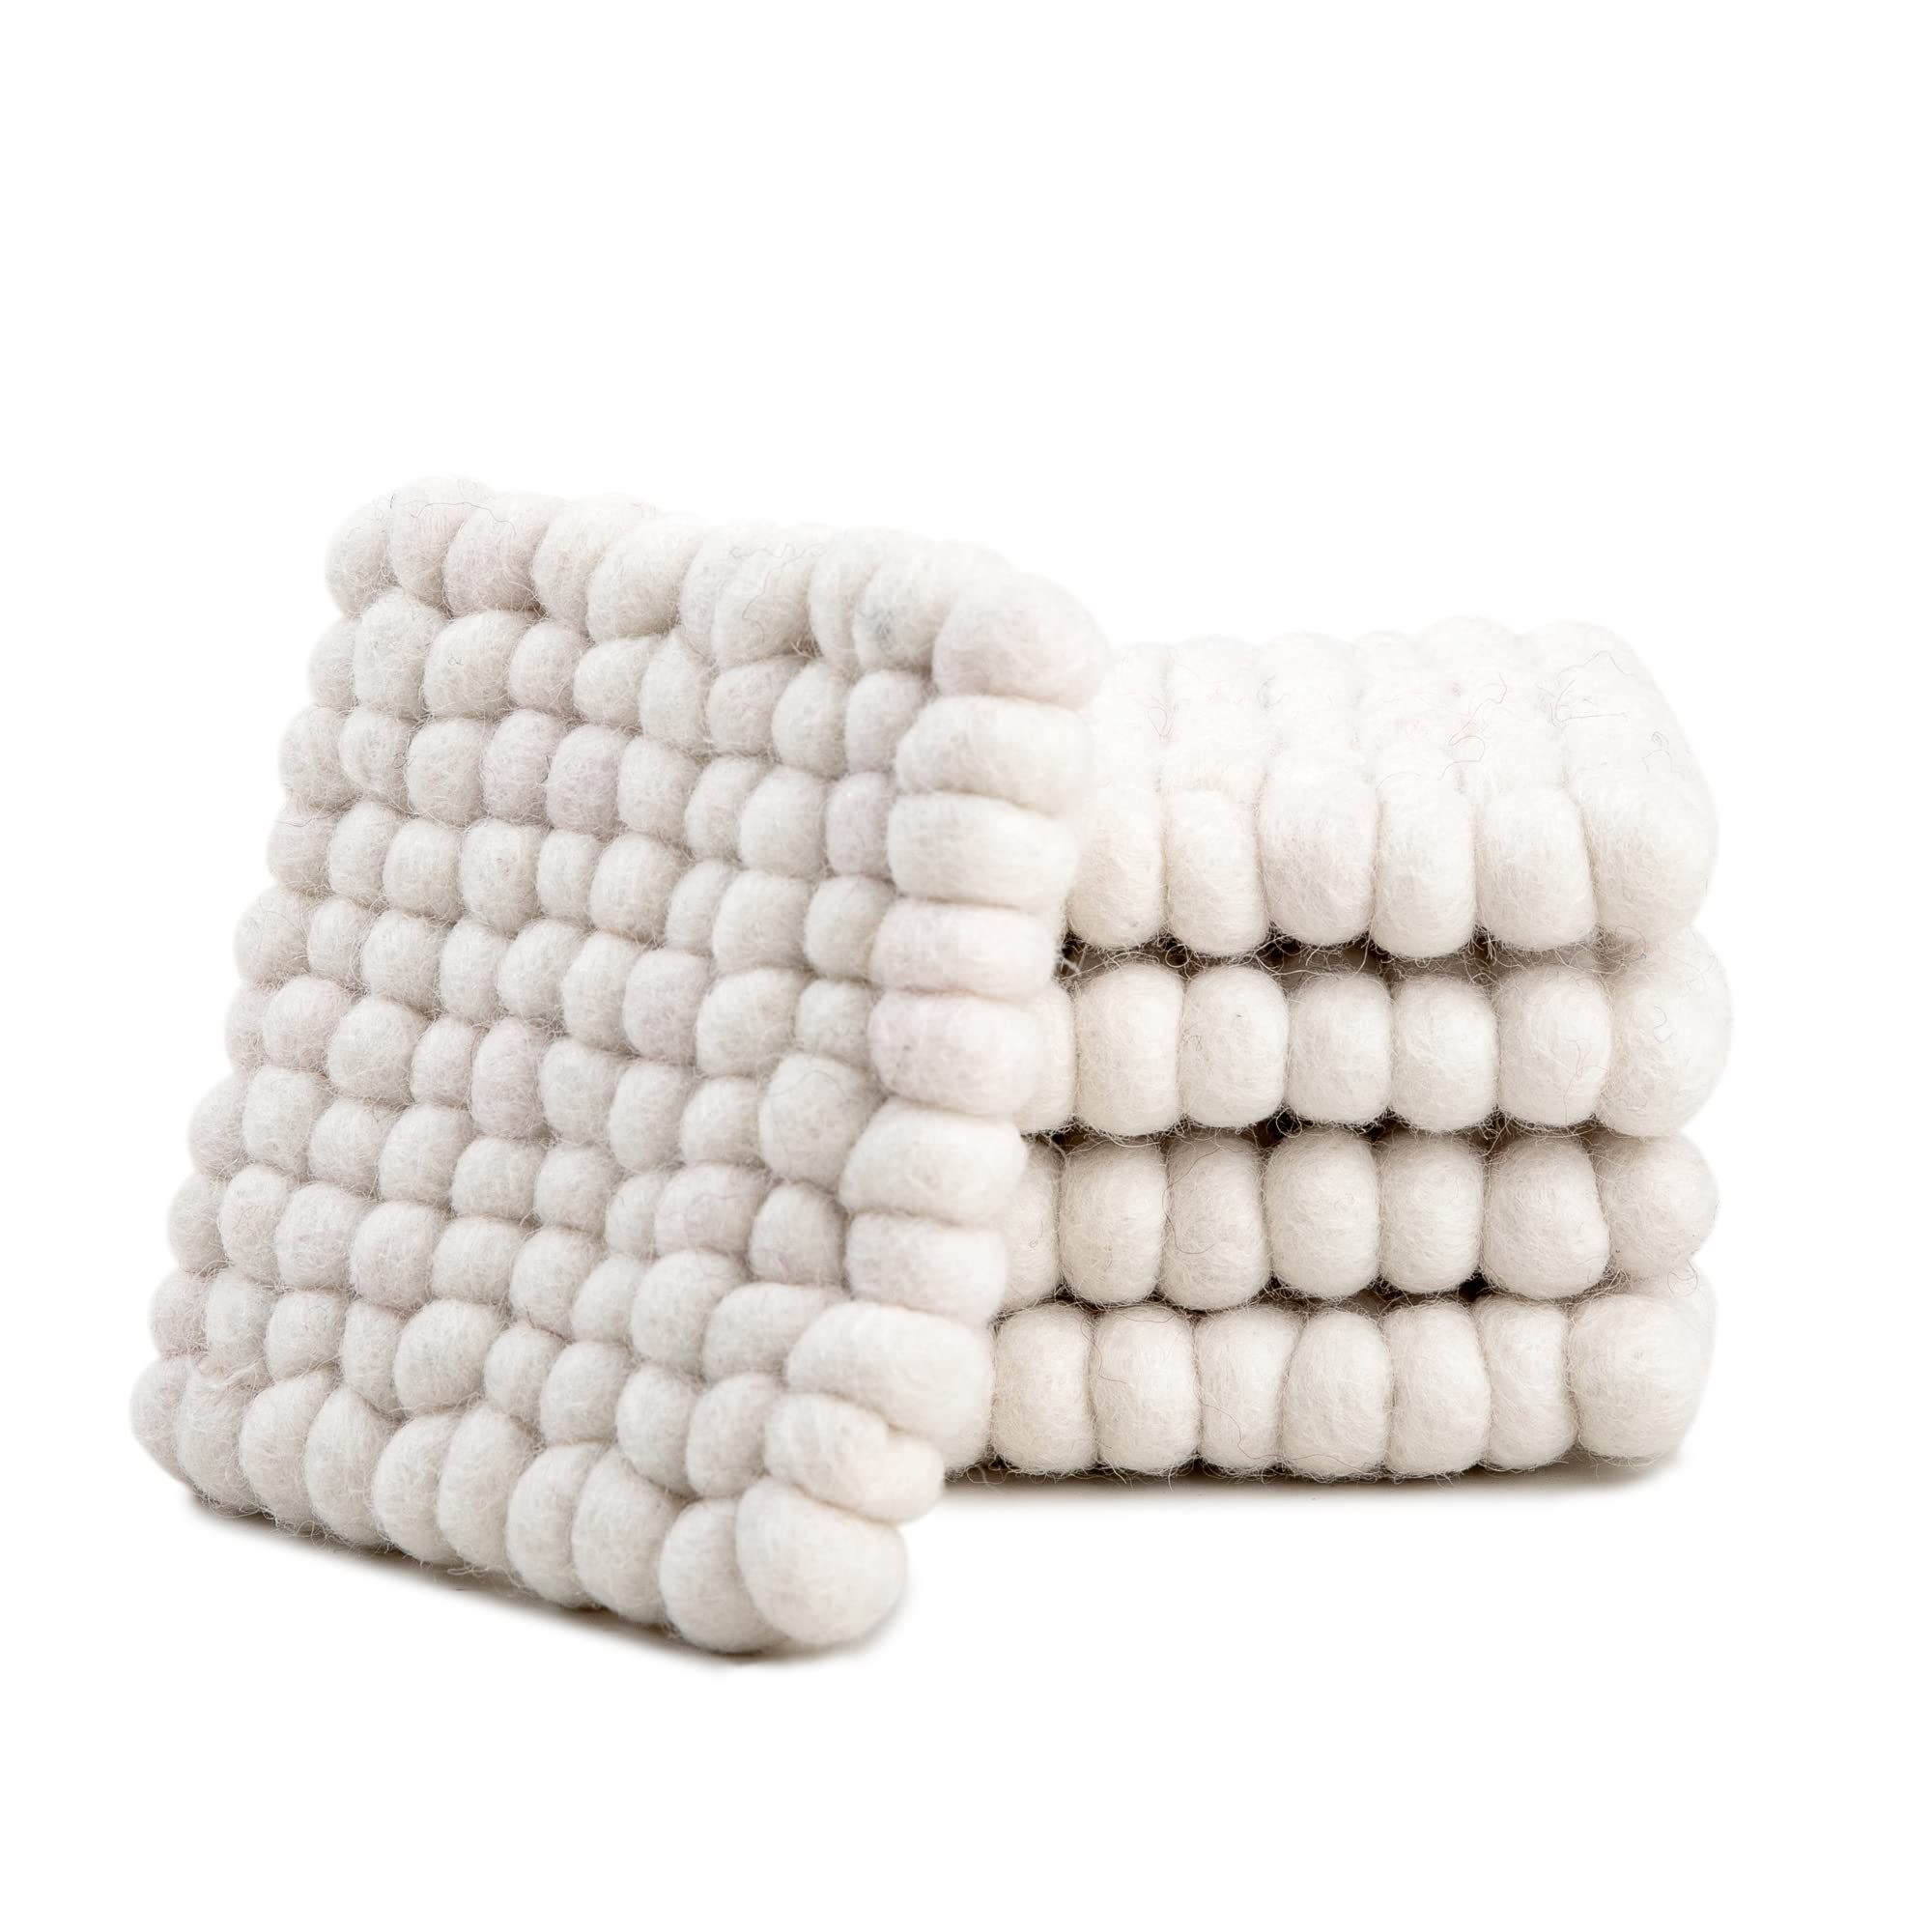 Square Felt Ball Coasters - 100% Merino Wool Table Coasters - Felt Coaster Pads, Absorbent Trivet... | Amazon (US)